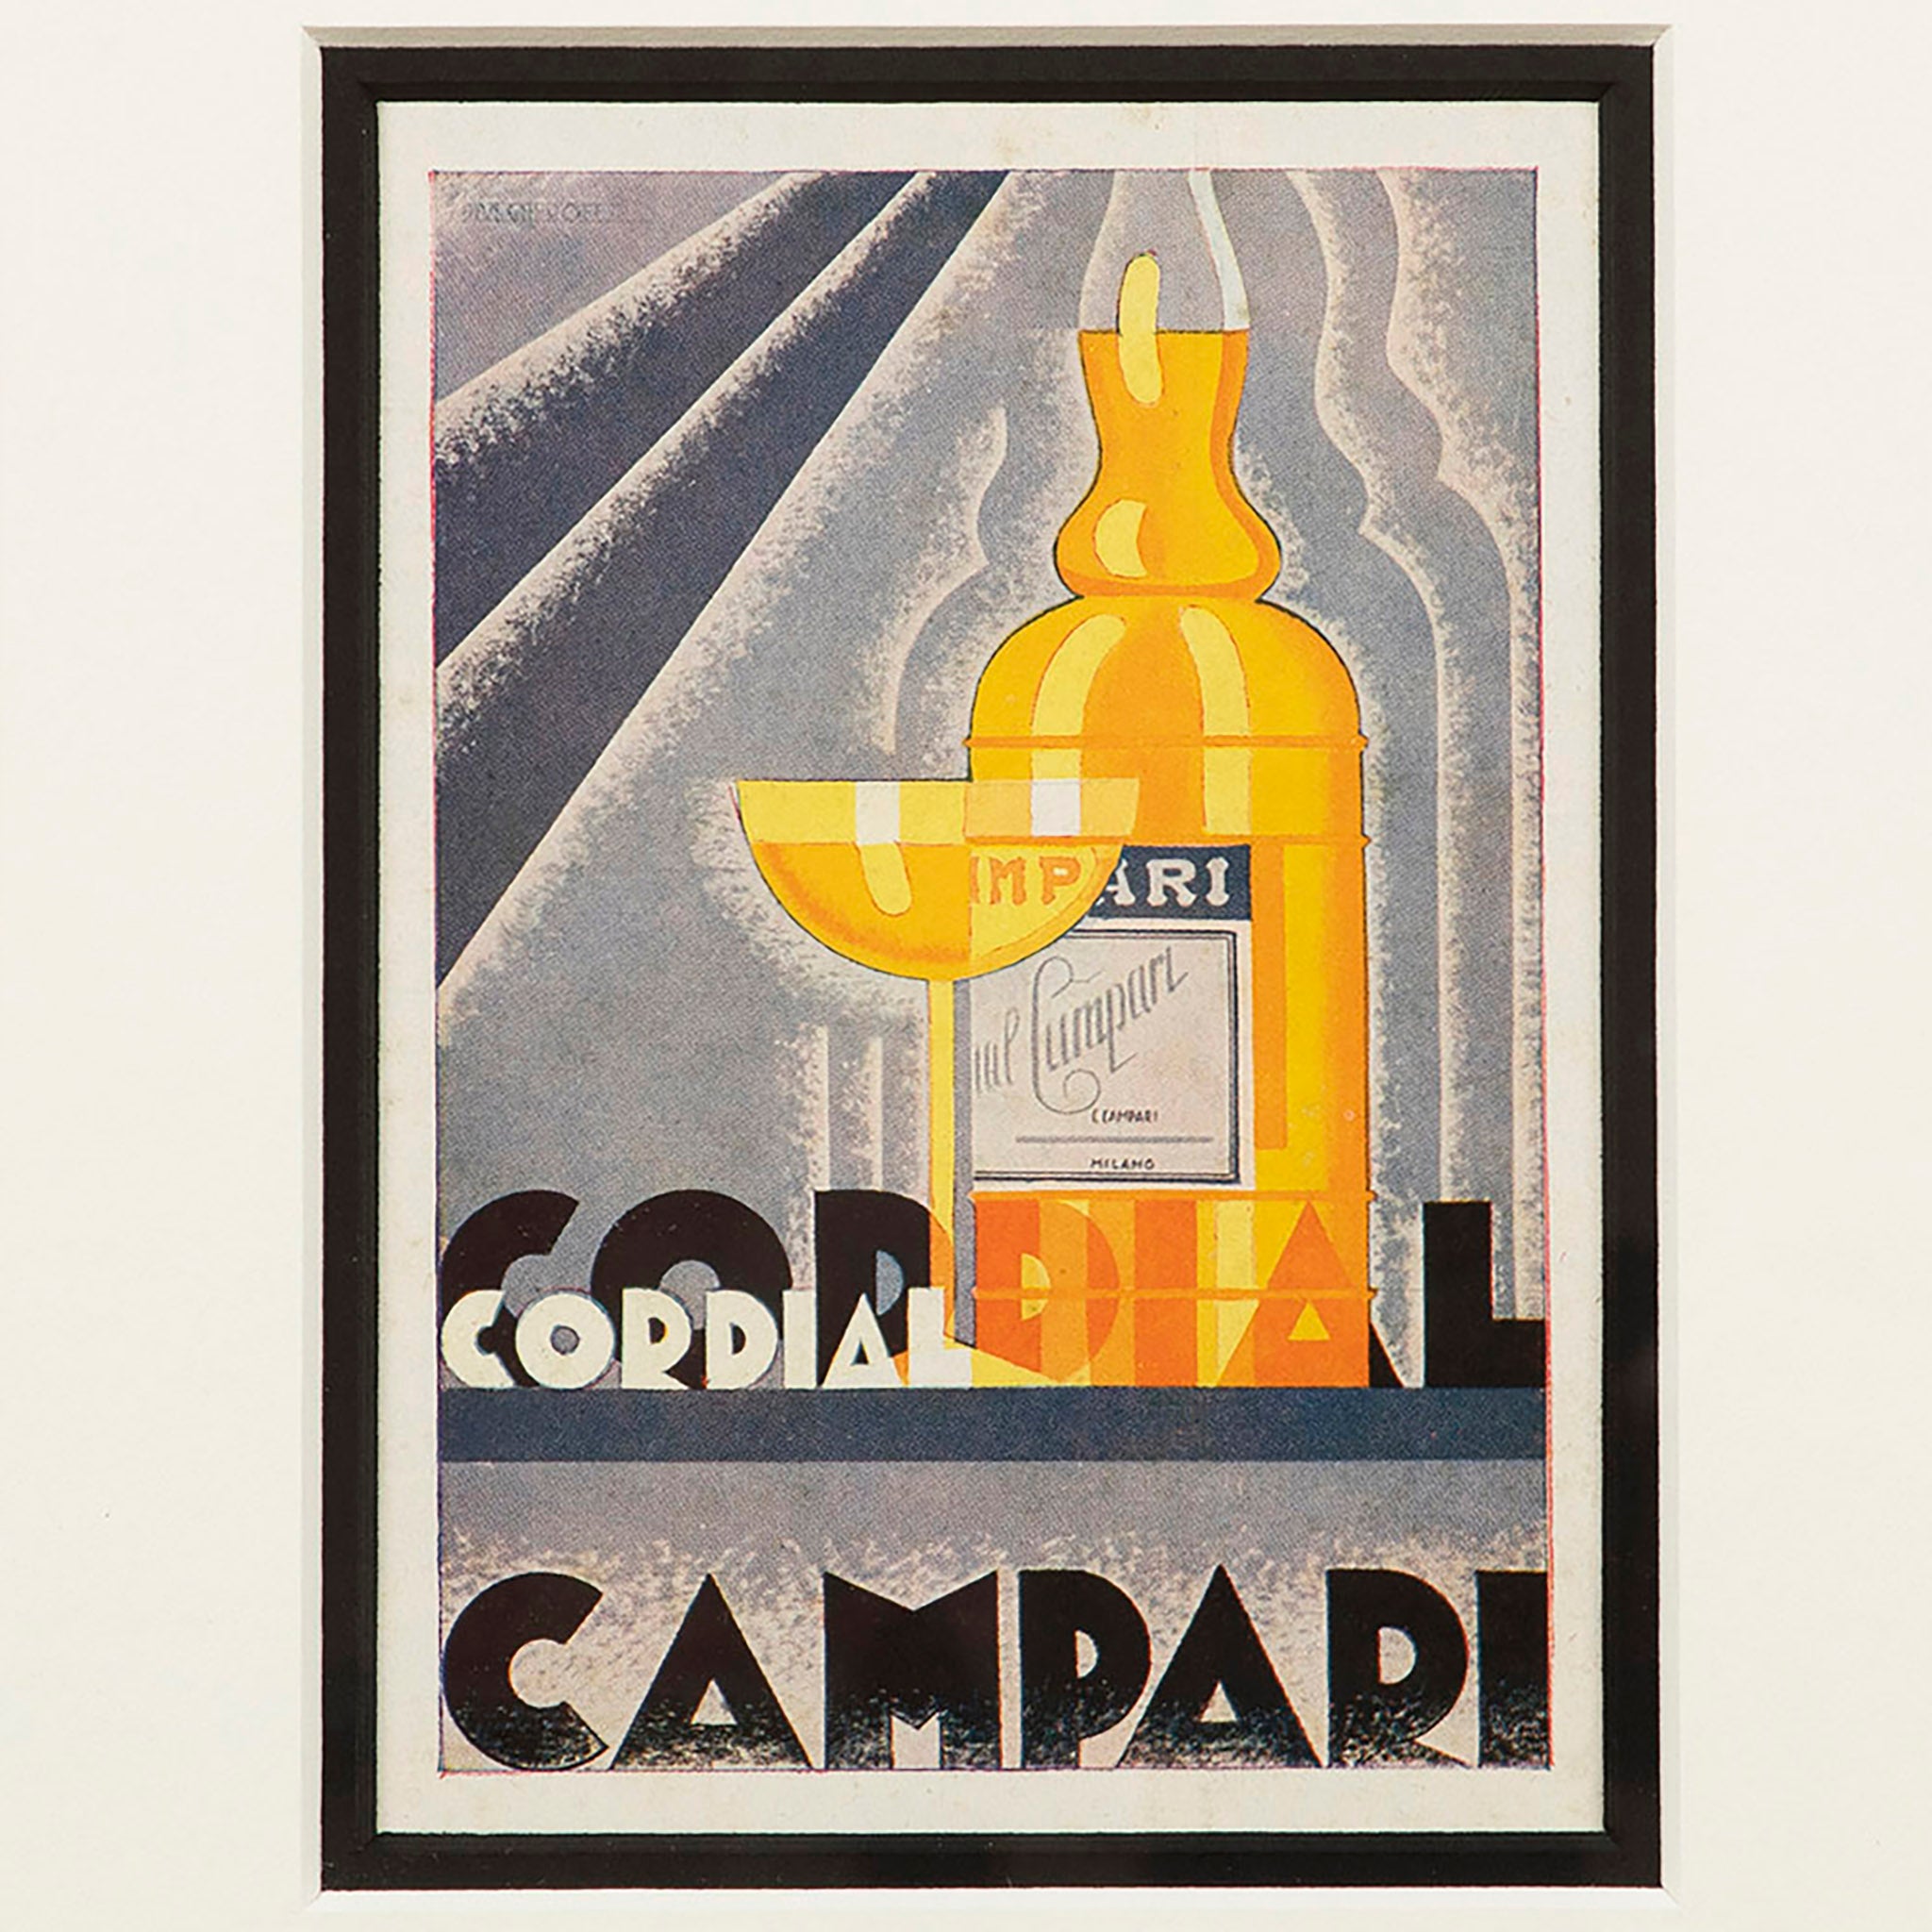 Framed Vintage Cordial Campari Advertisement by Futurist artist Nikolay Diulgheroff